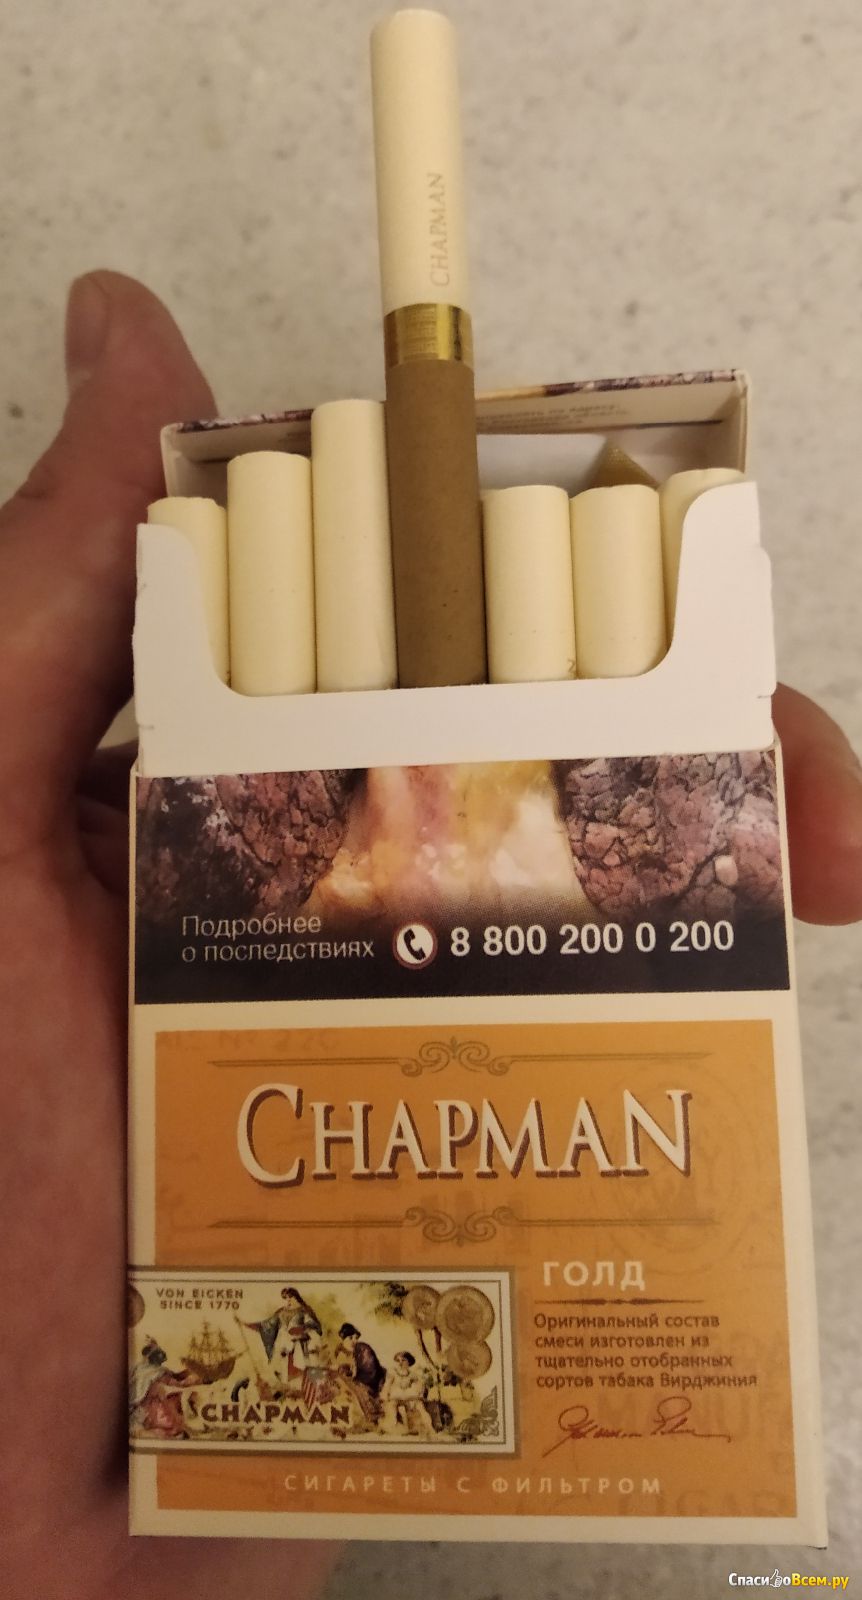 Чапмен вкусы. Сигареты Chapman Gold Голд. Чапман сигареты Голд вкус. Chapman сигареты Абхазия. Сигареты Chapman King Size Gold.